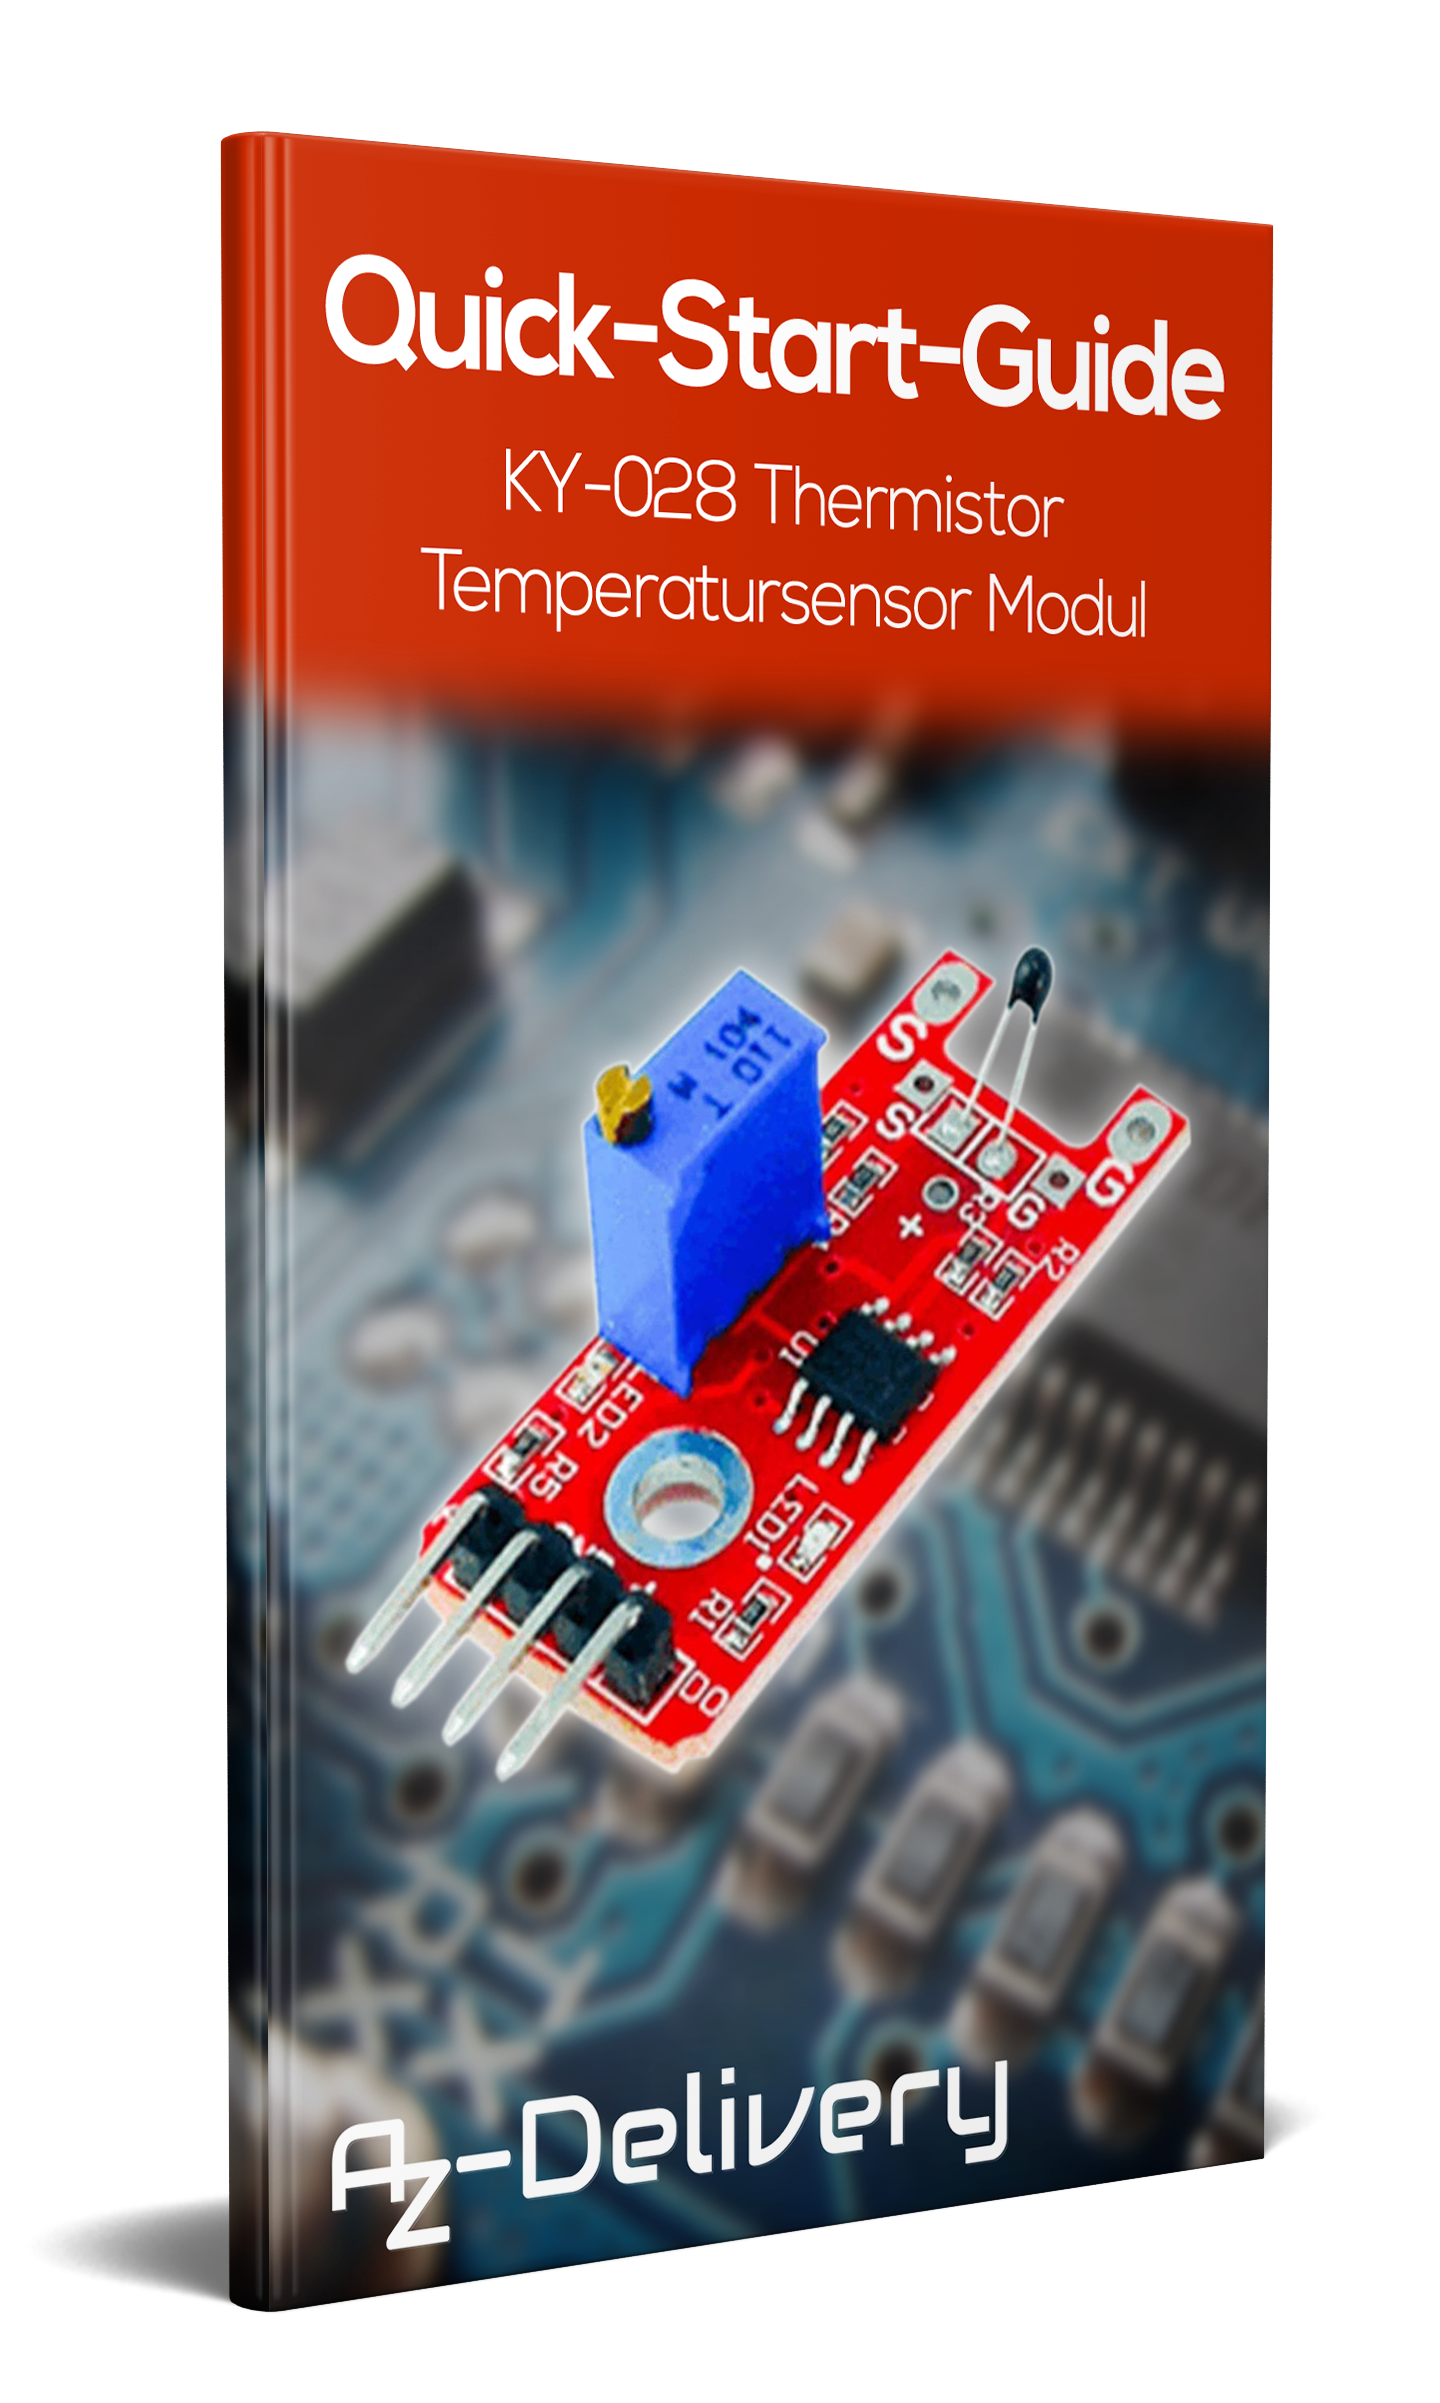 Ky-028 Thermistor Temperature sensor